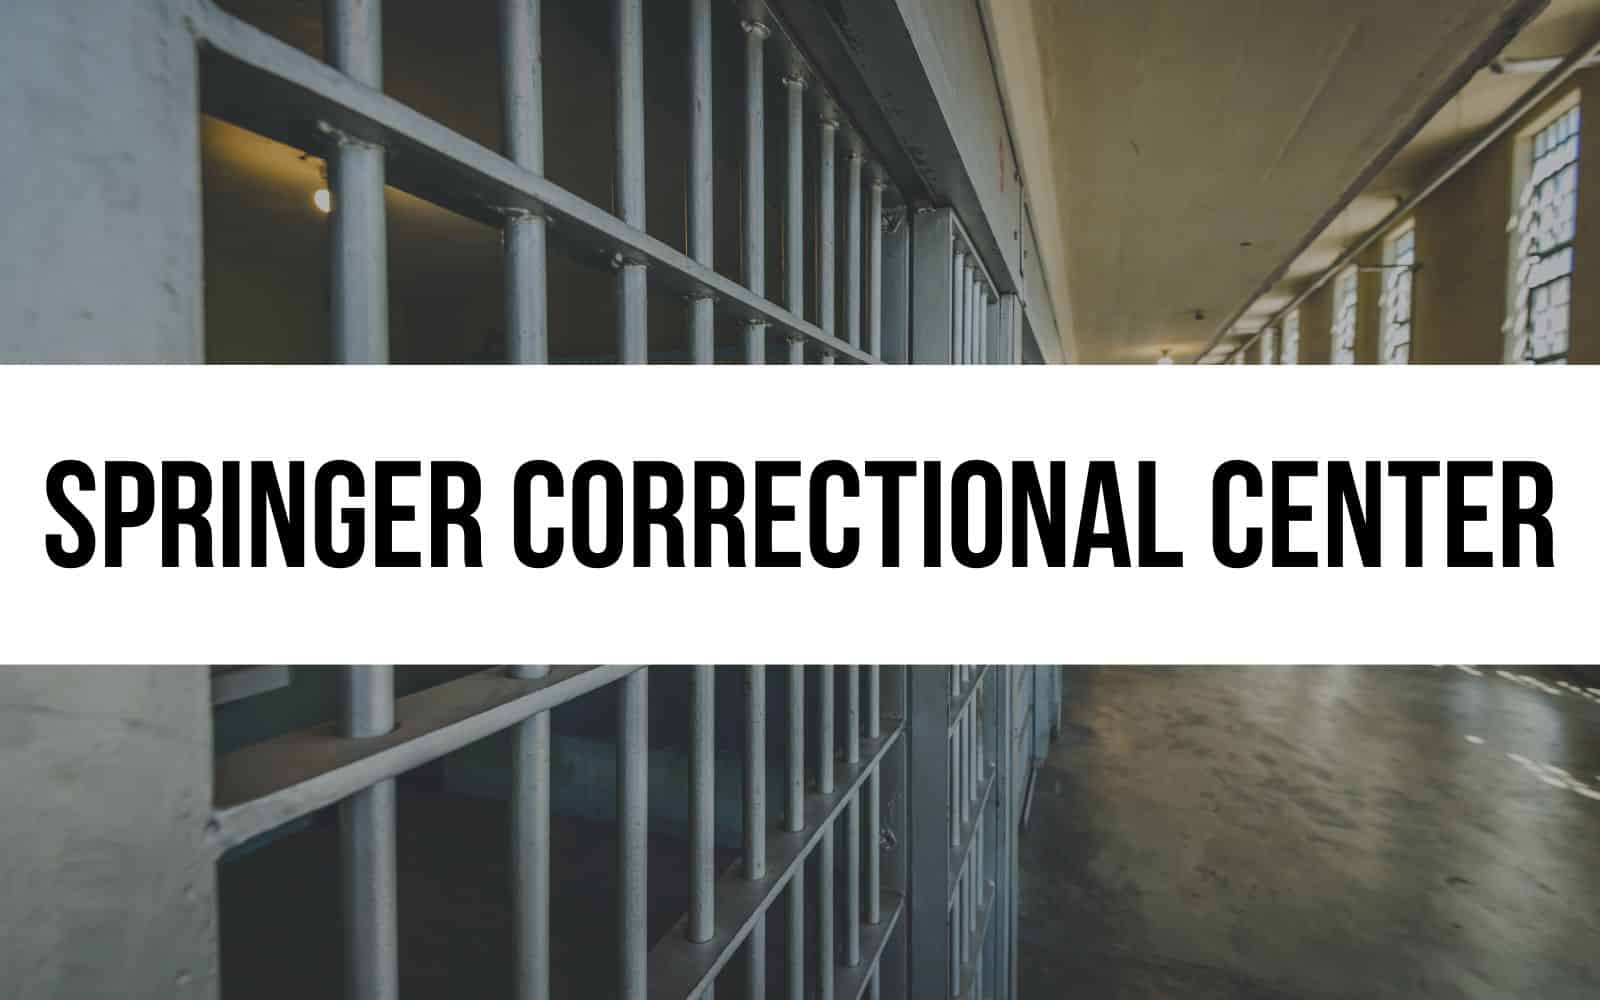 Springer Correctional Center